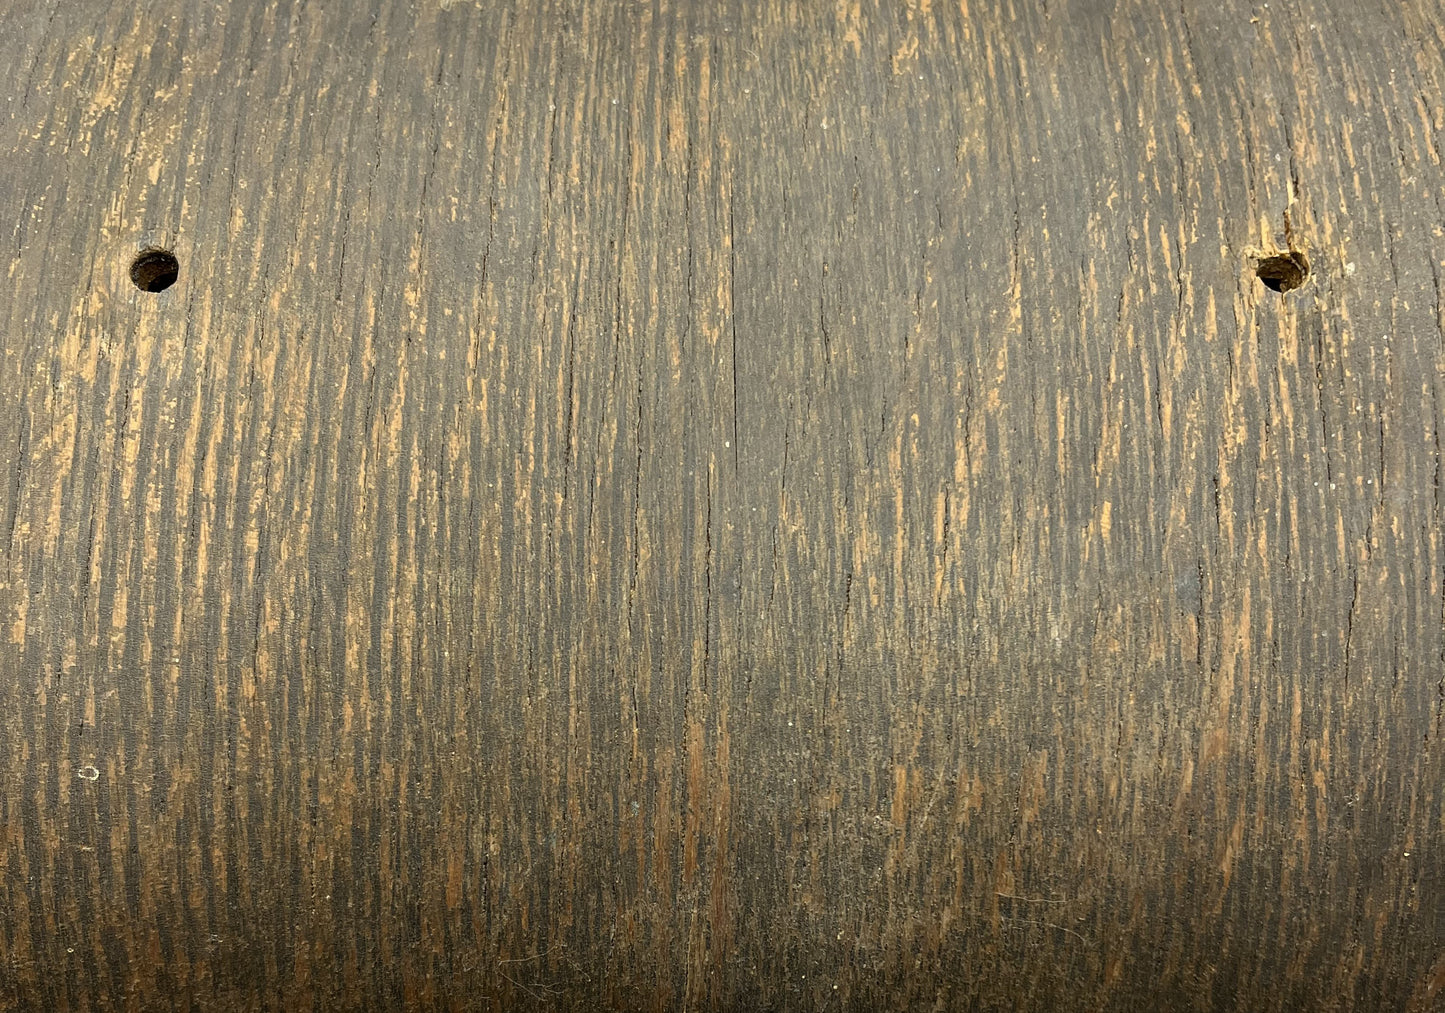 Edison Standard Cover [Lid] Oak - Poor "Certified Original"